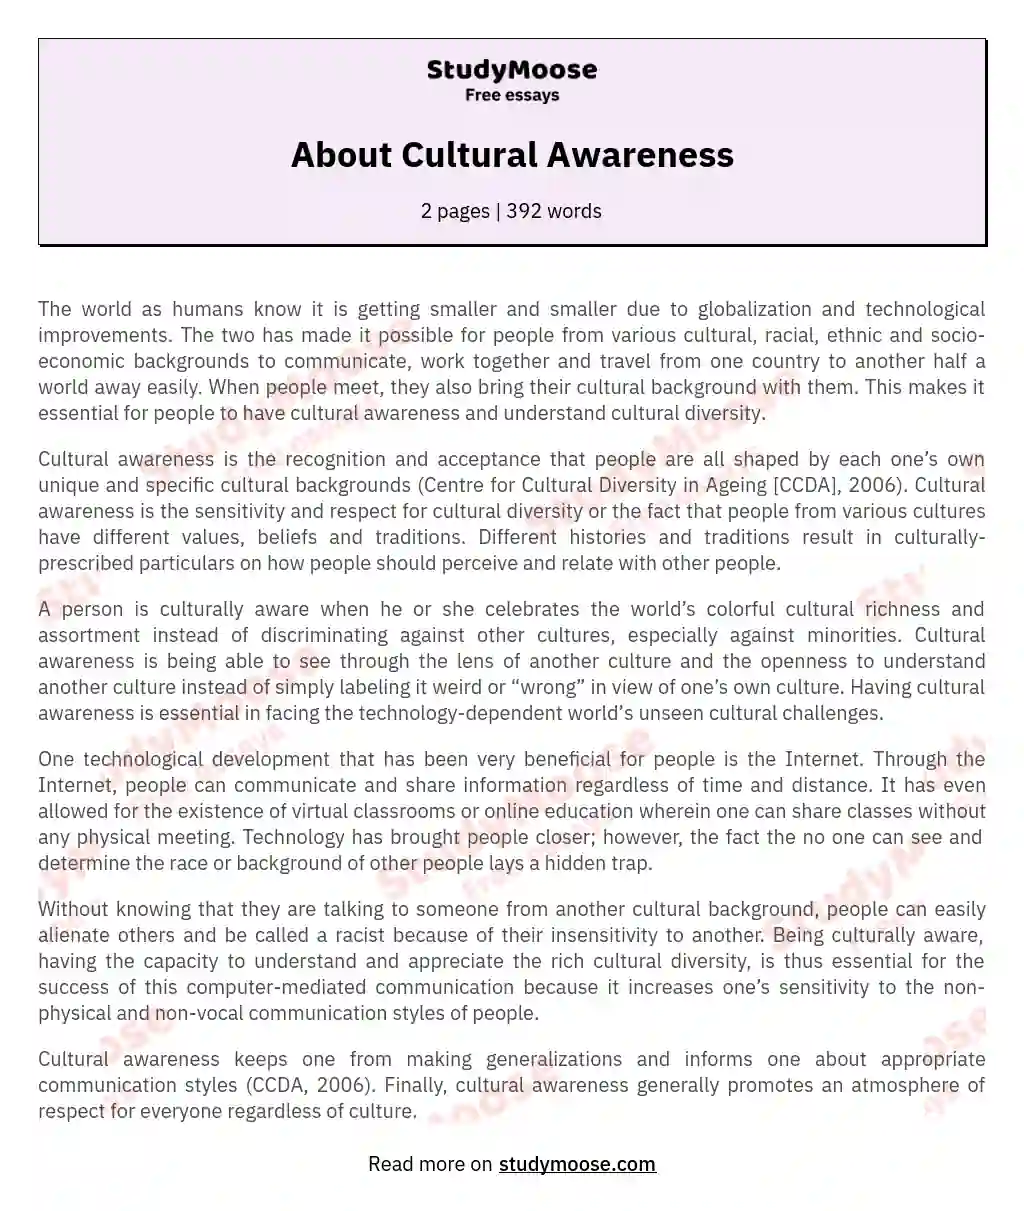 About Cultural Awareness